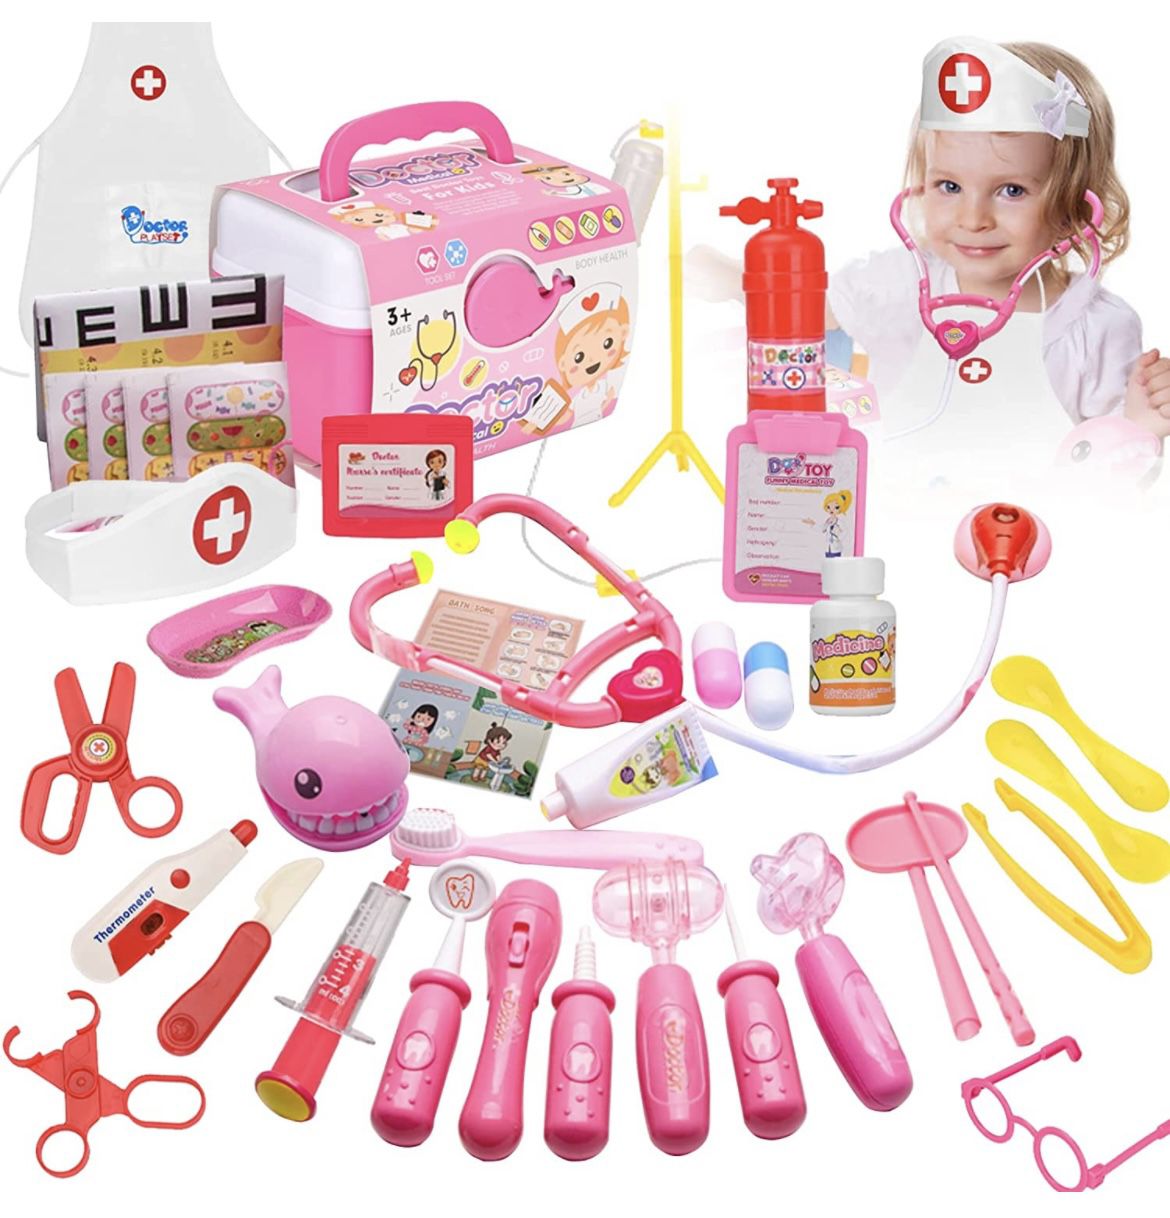 Doctor Kit Toy